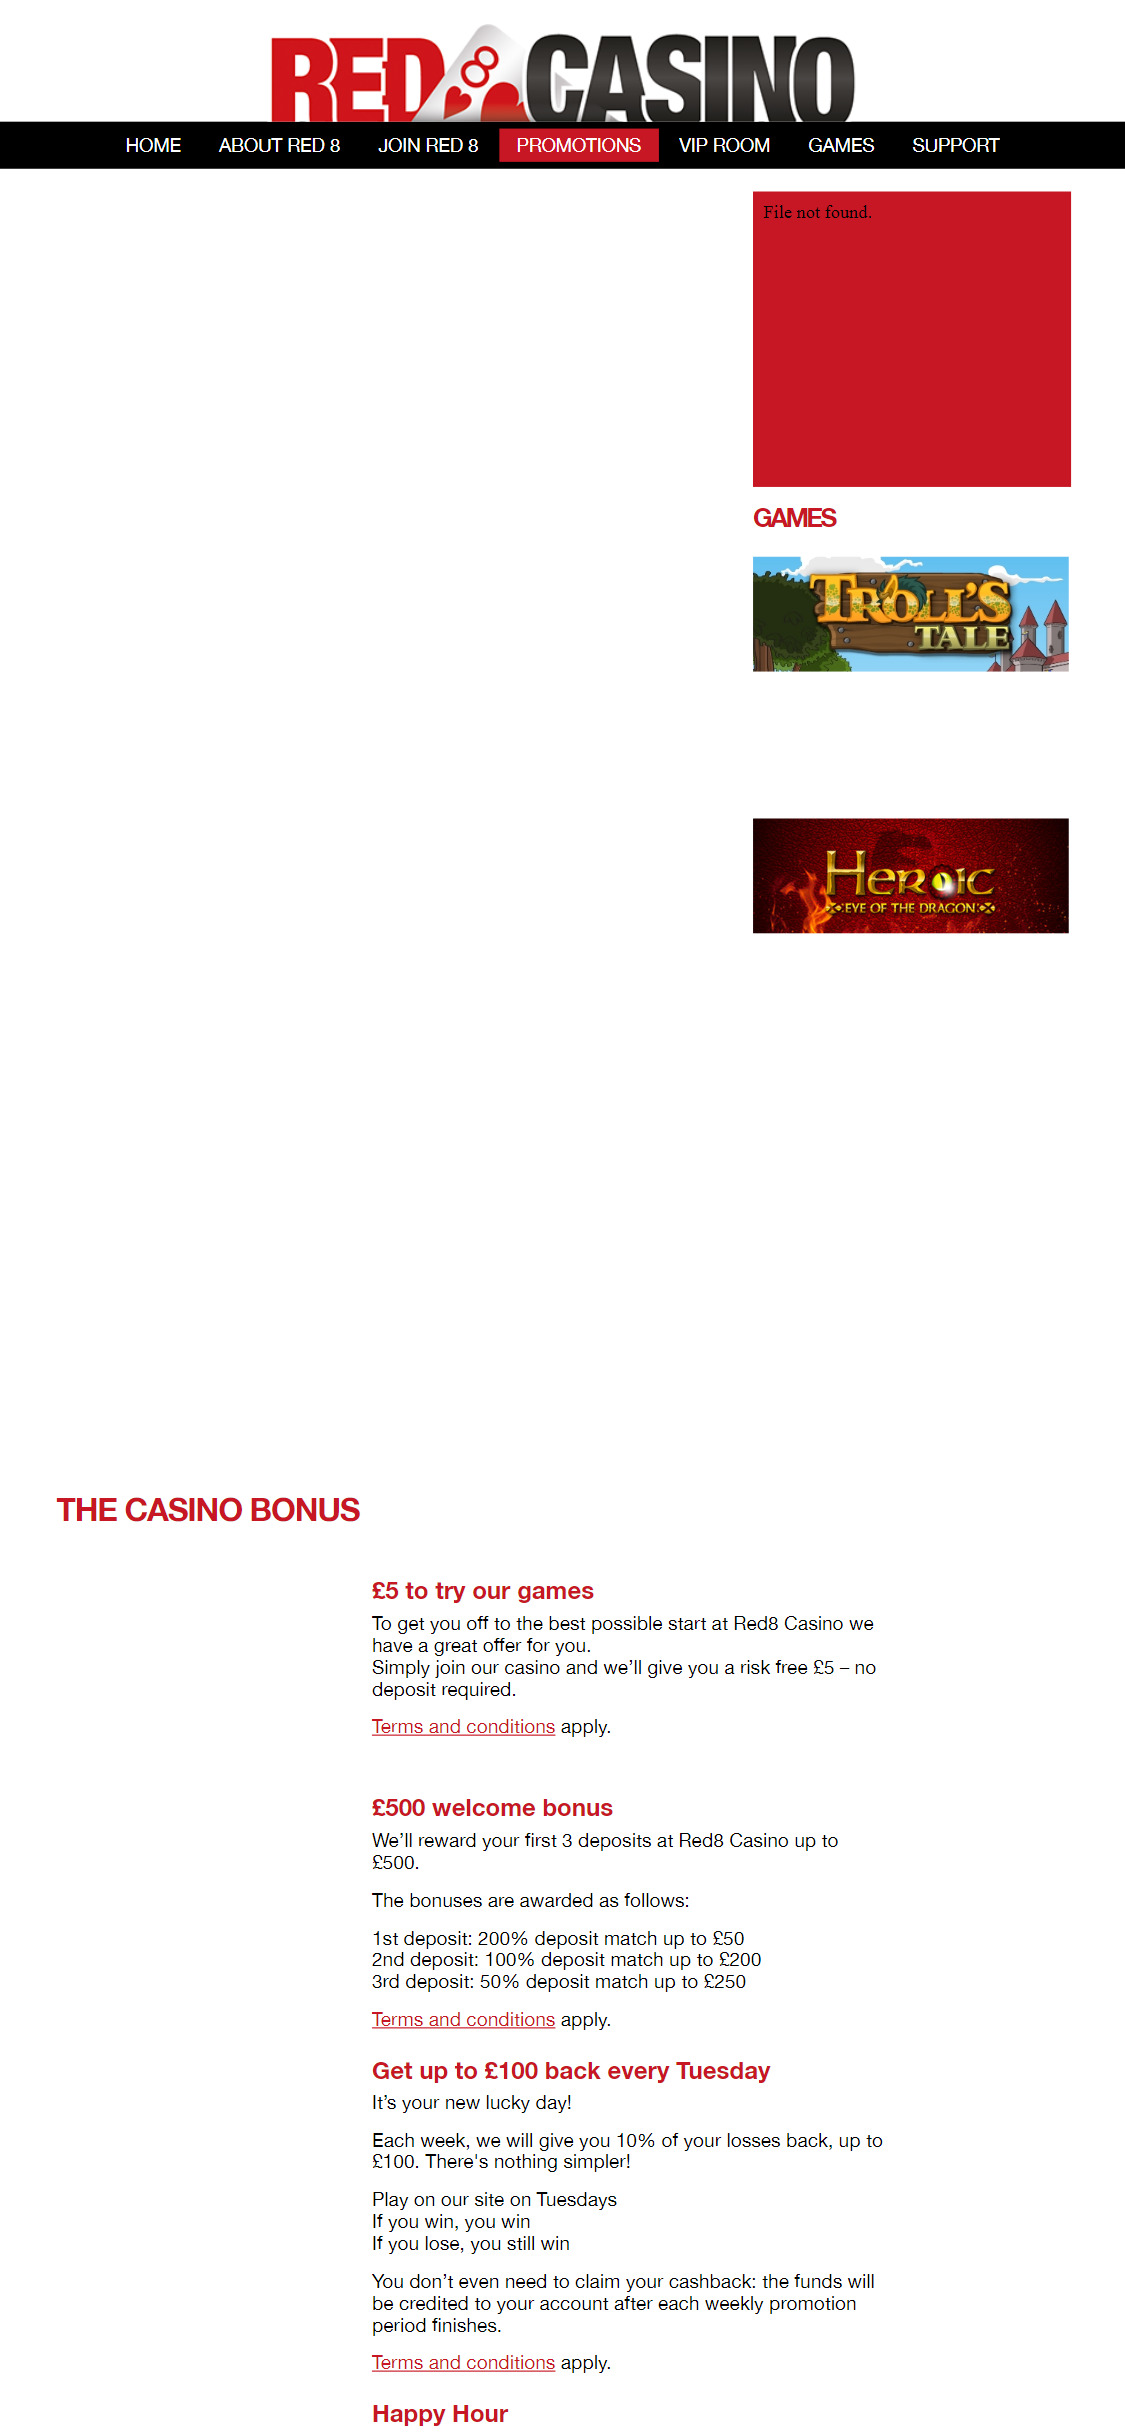 Red 8 Casino Mobile No Deposit Bonus Review